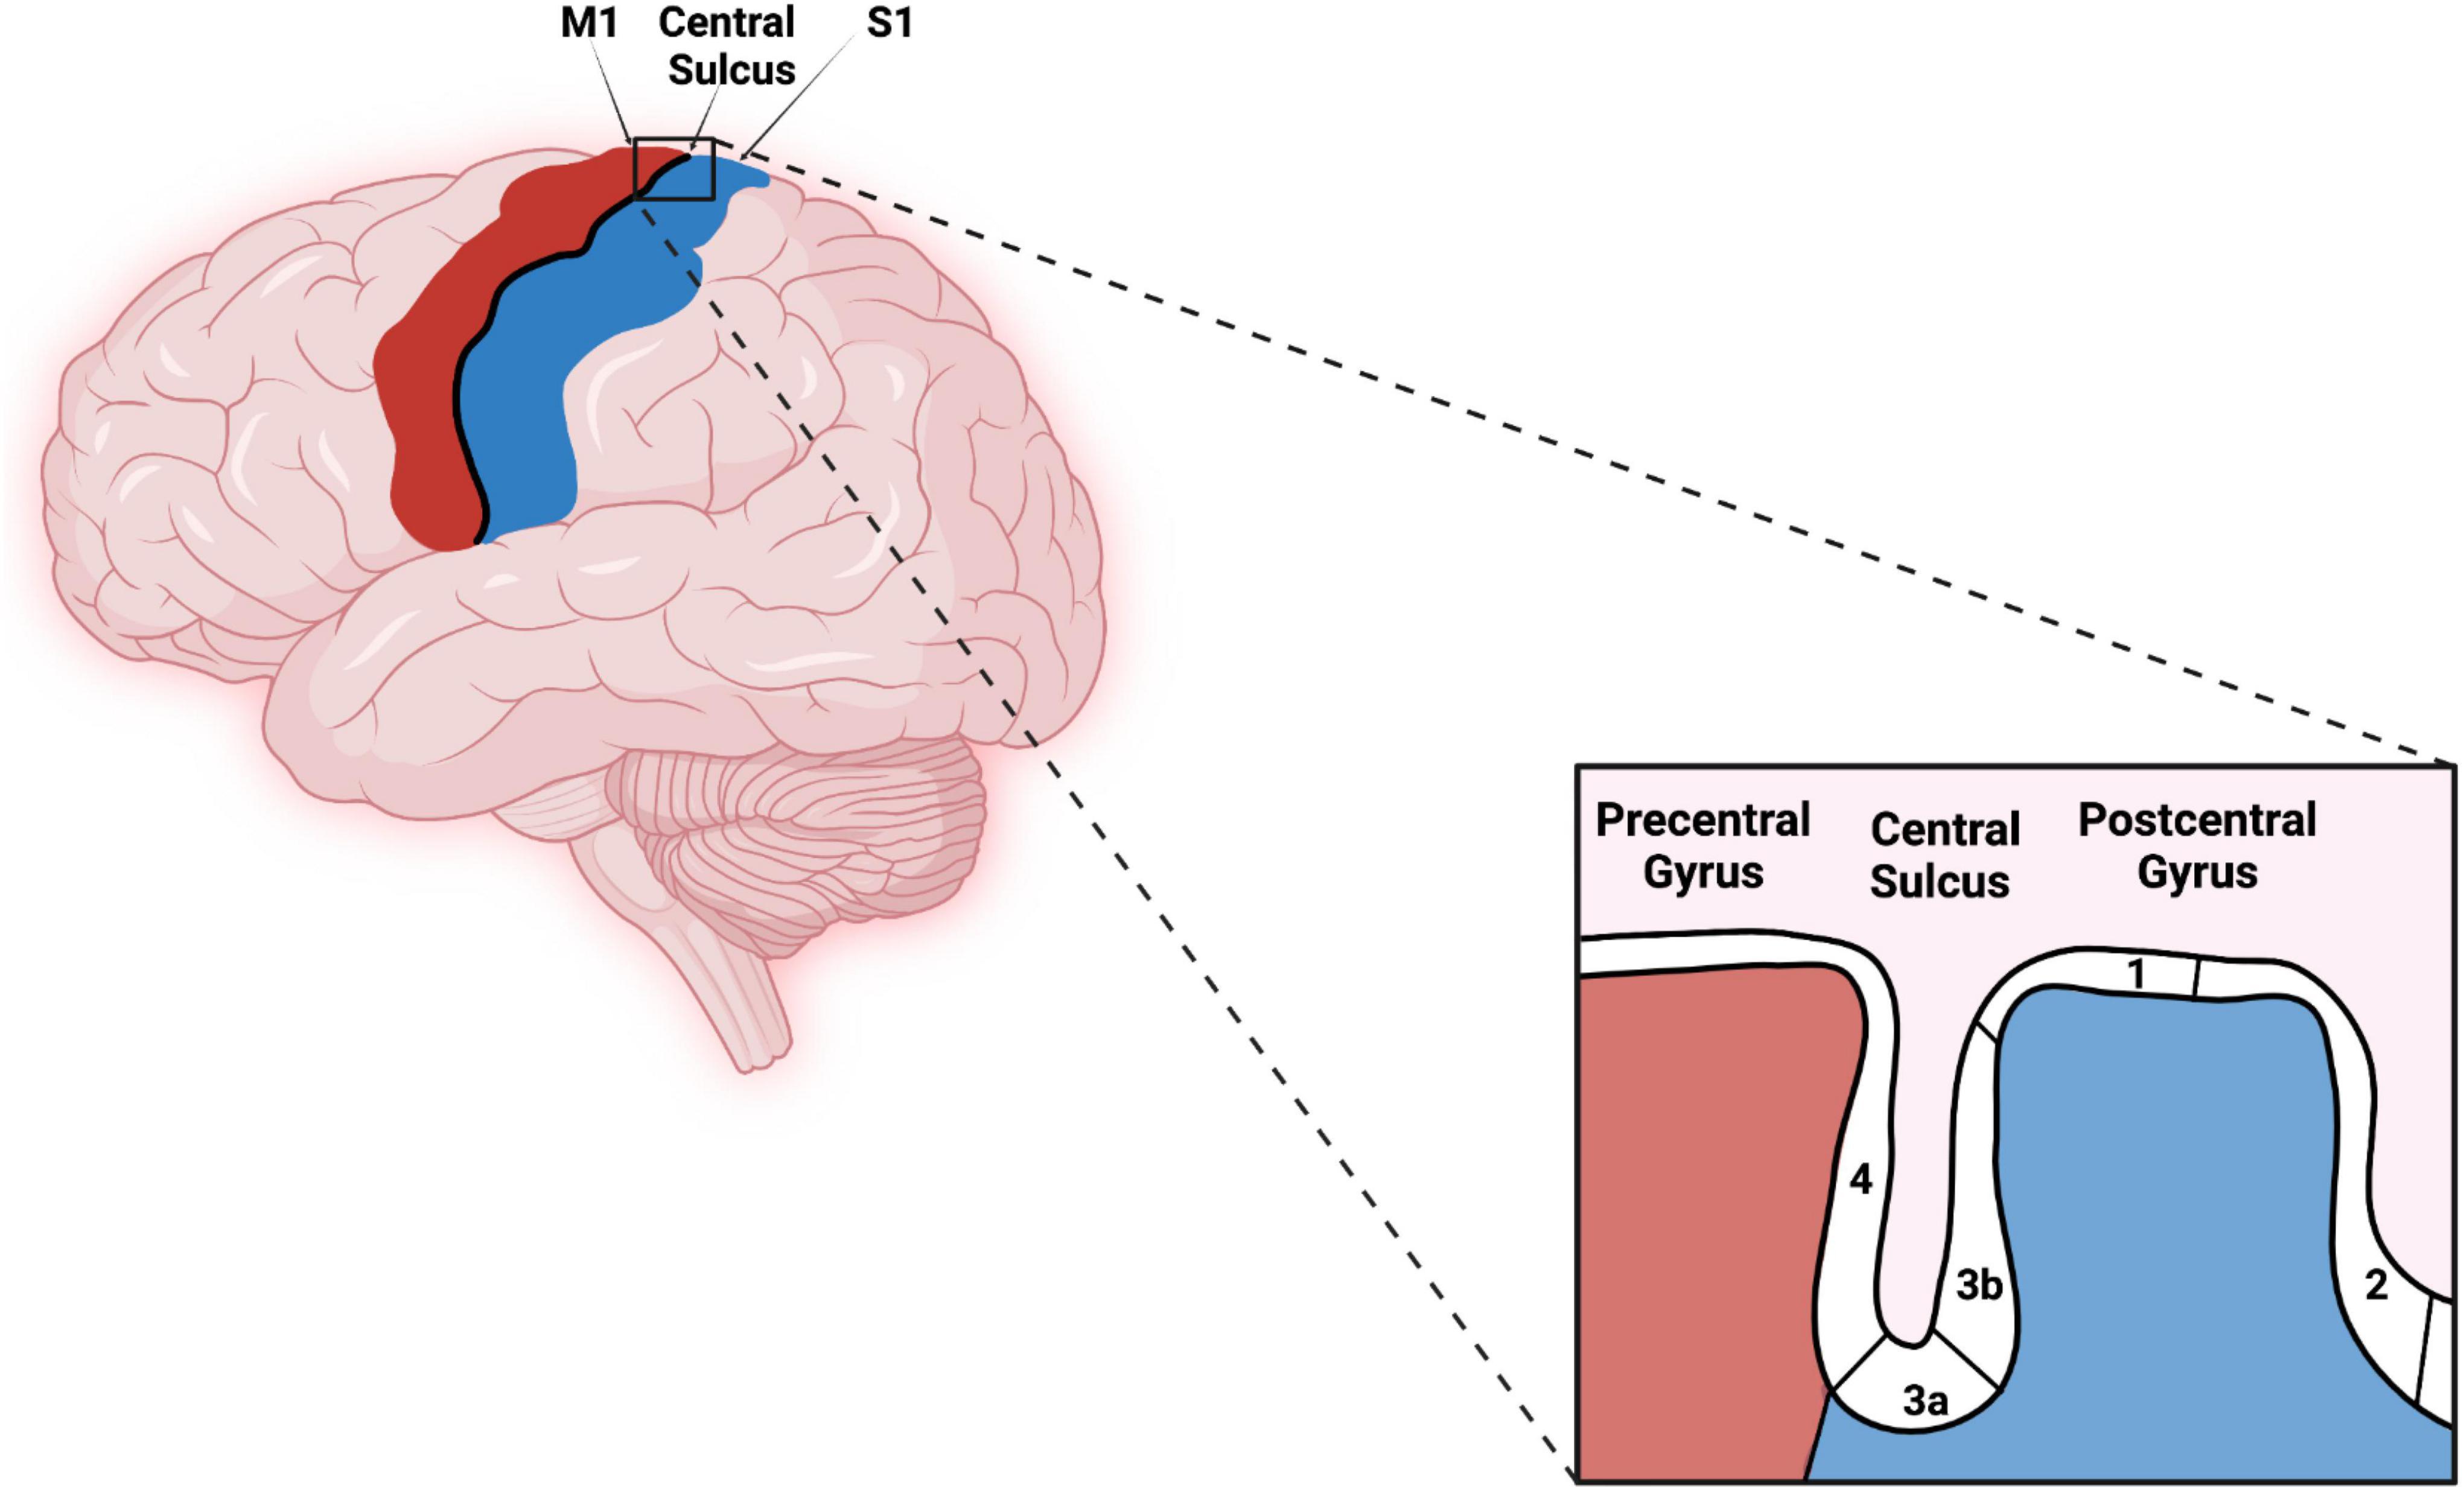 secondary somatosensory cortex